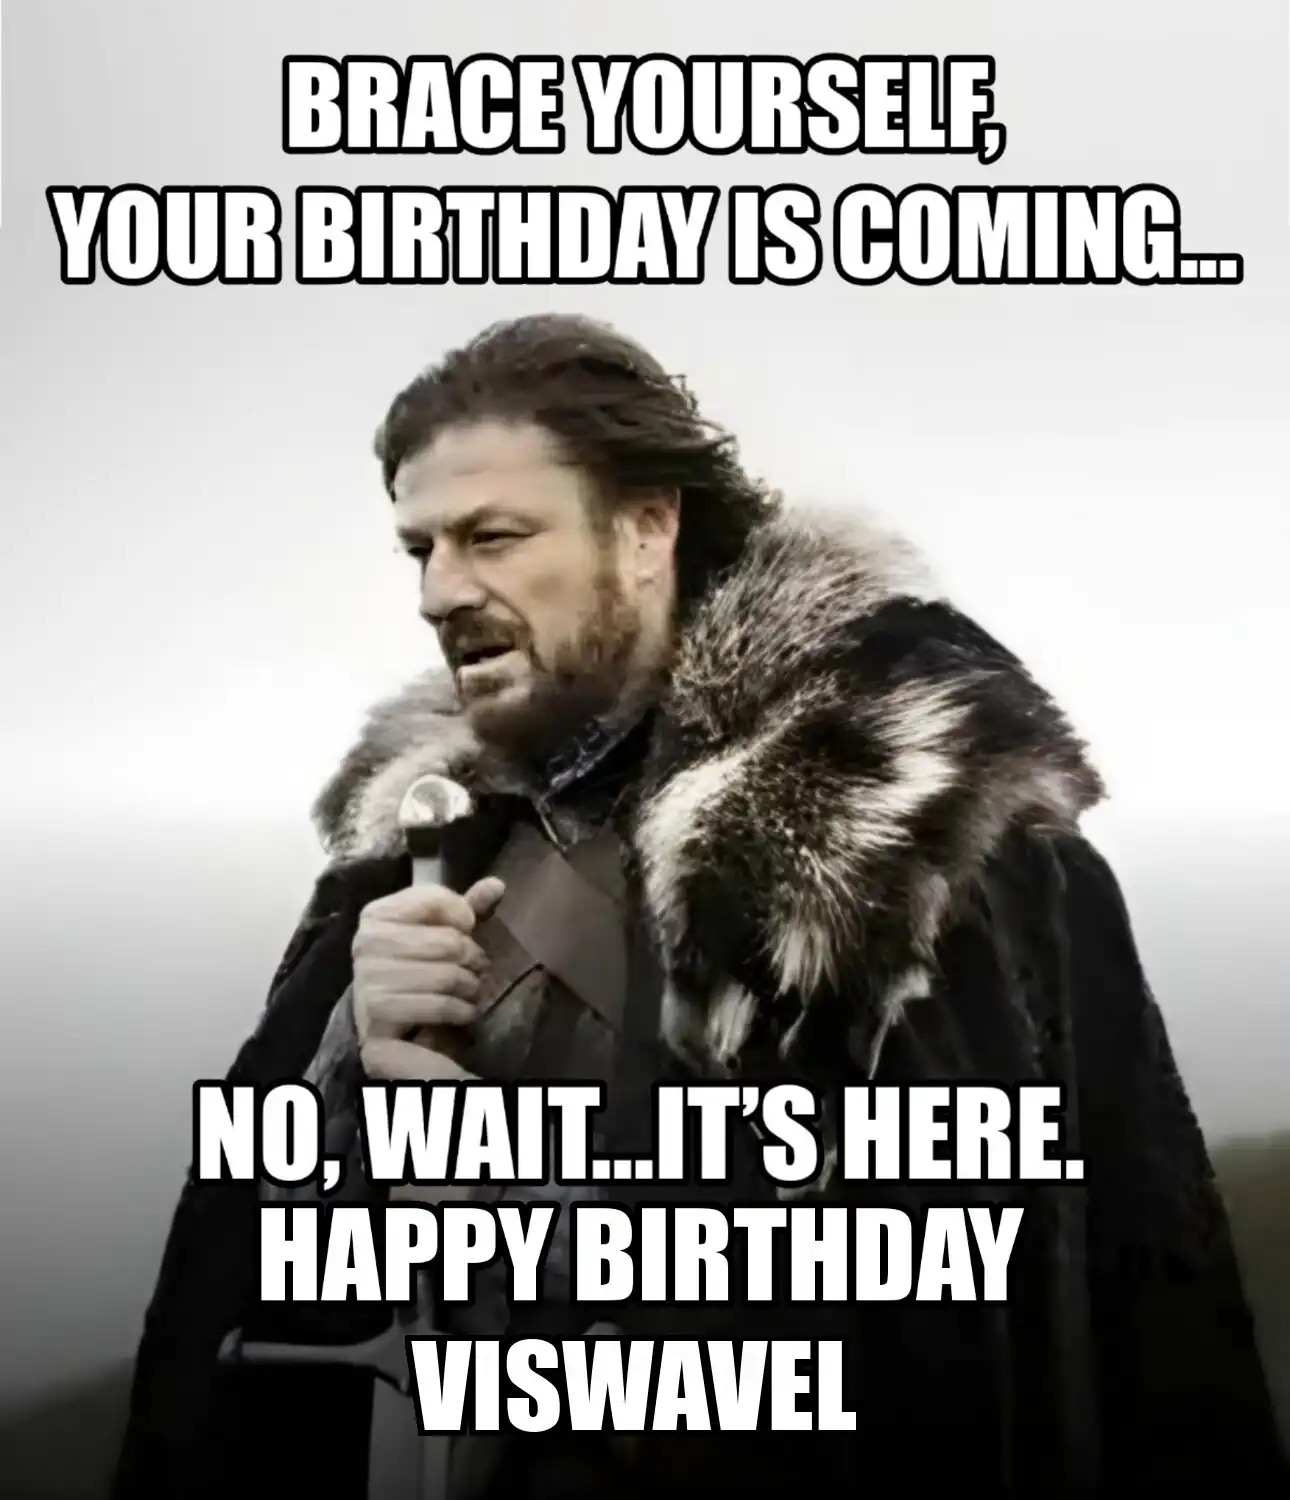 Happy Birthday Viswavel Brace Yourself Your Birthday Is Coming Meme